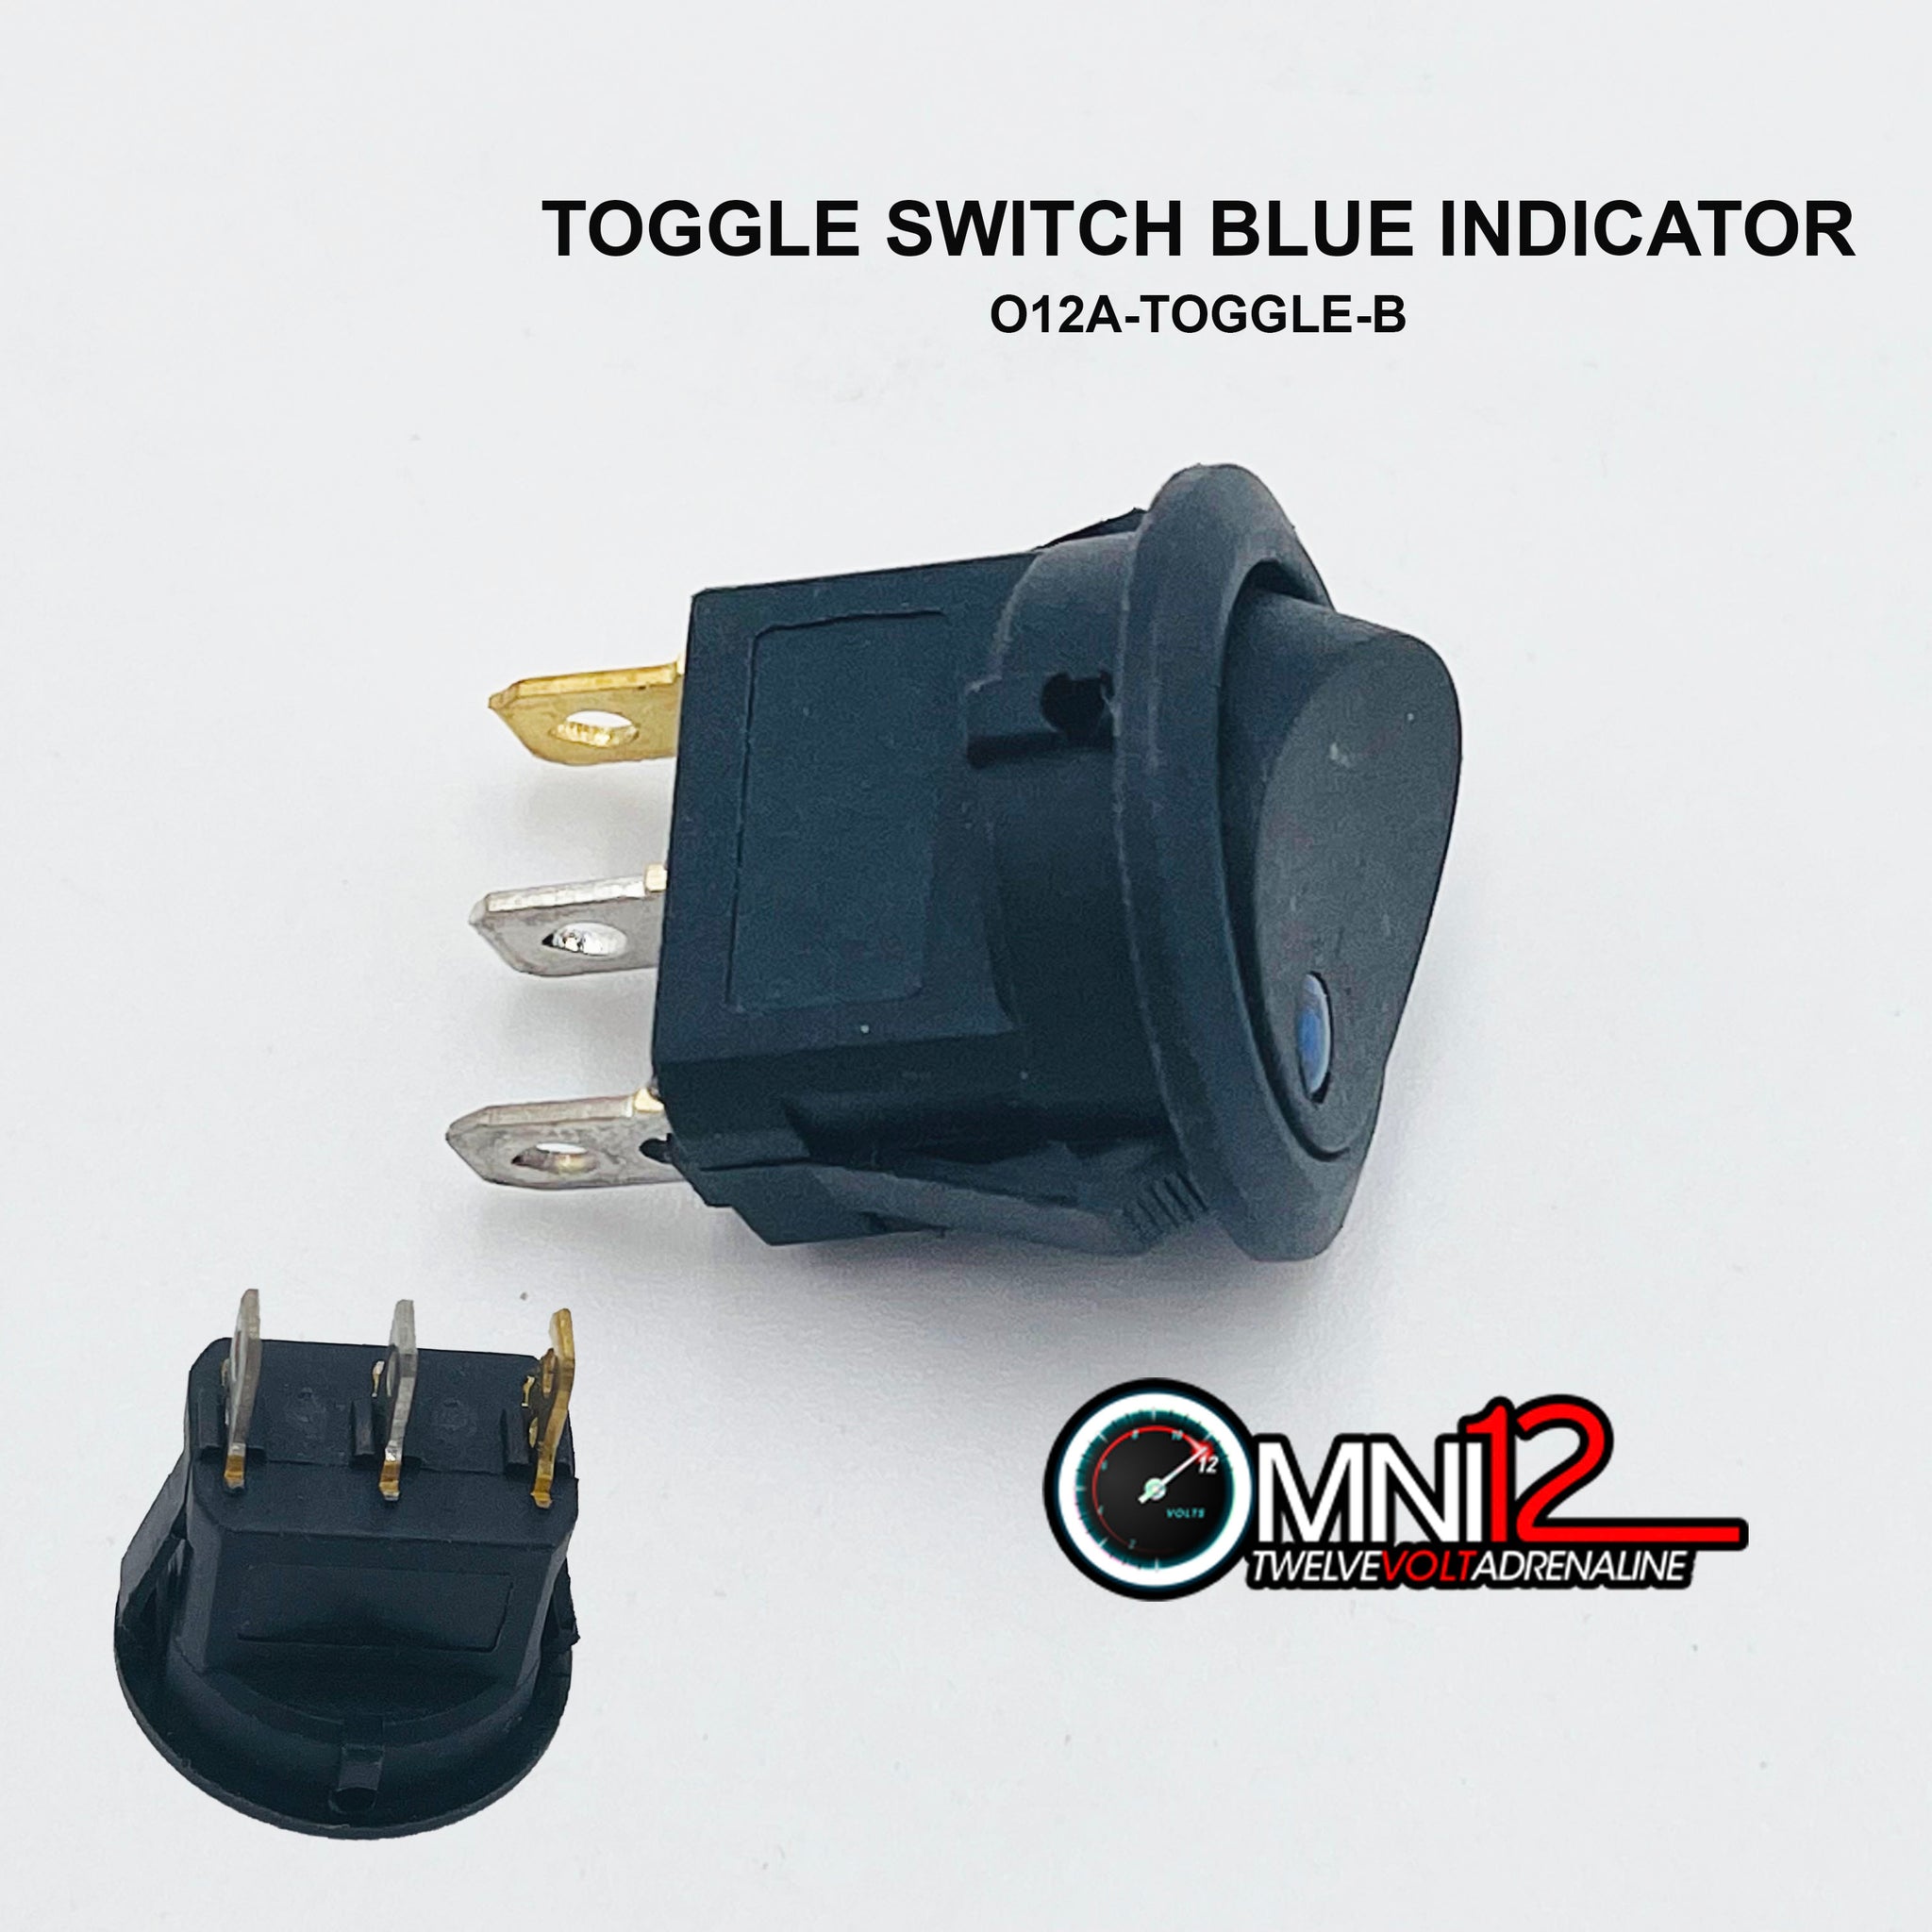 Toggle switch amber Indicator